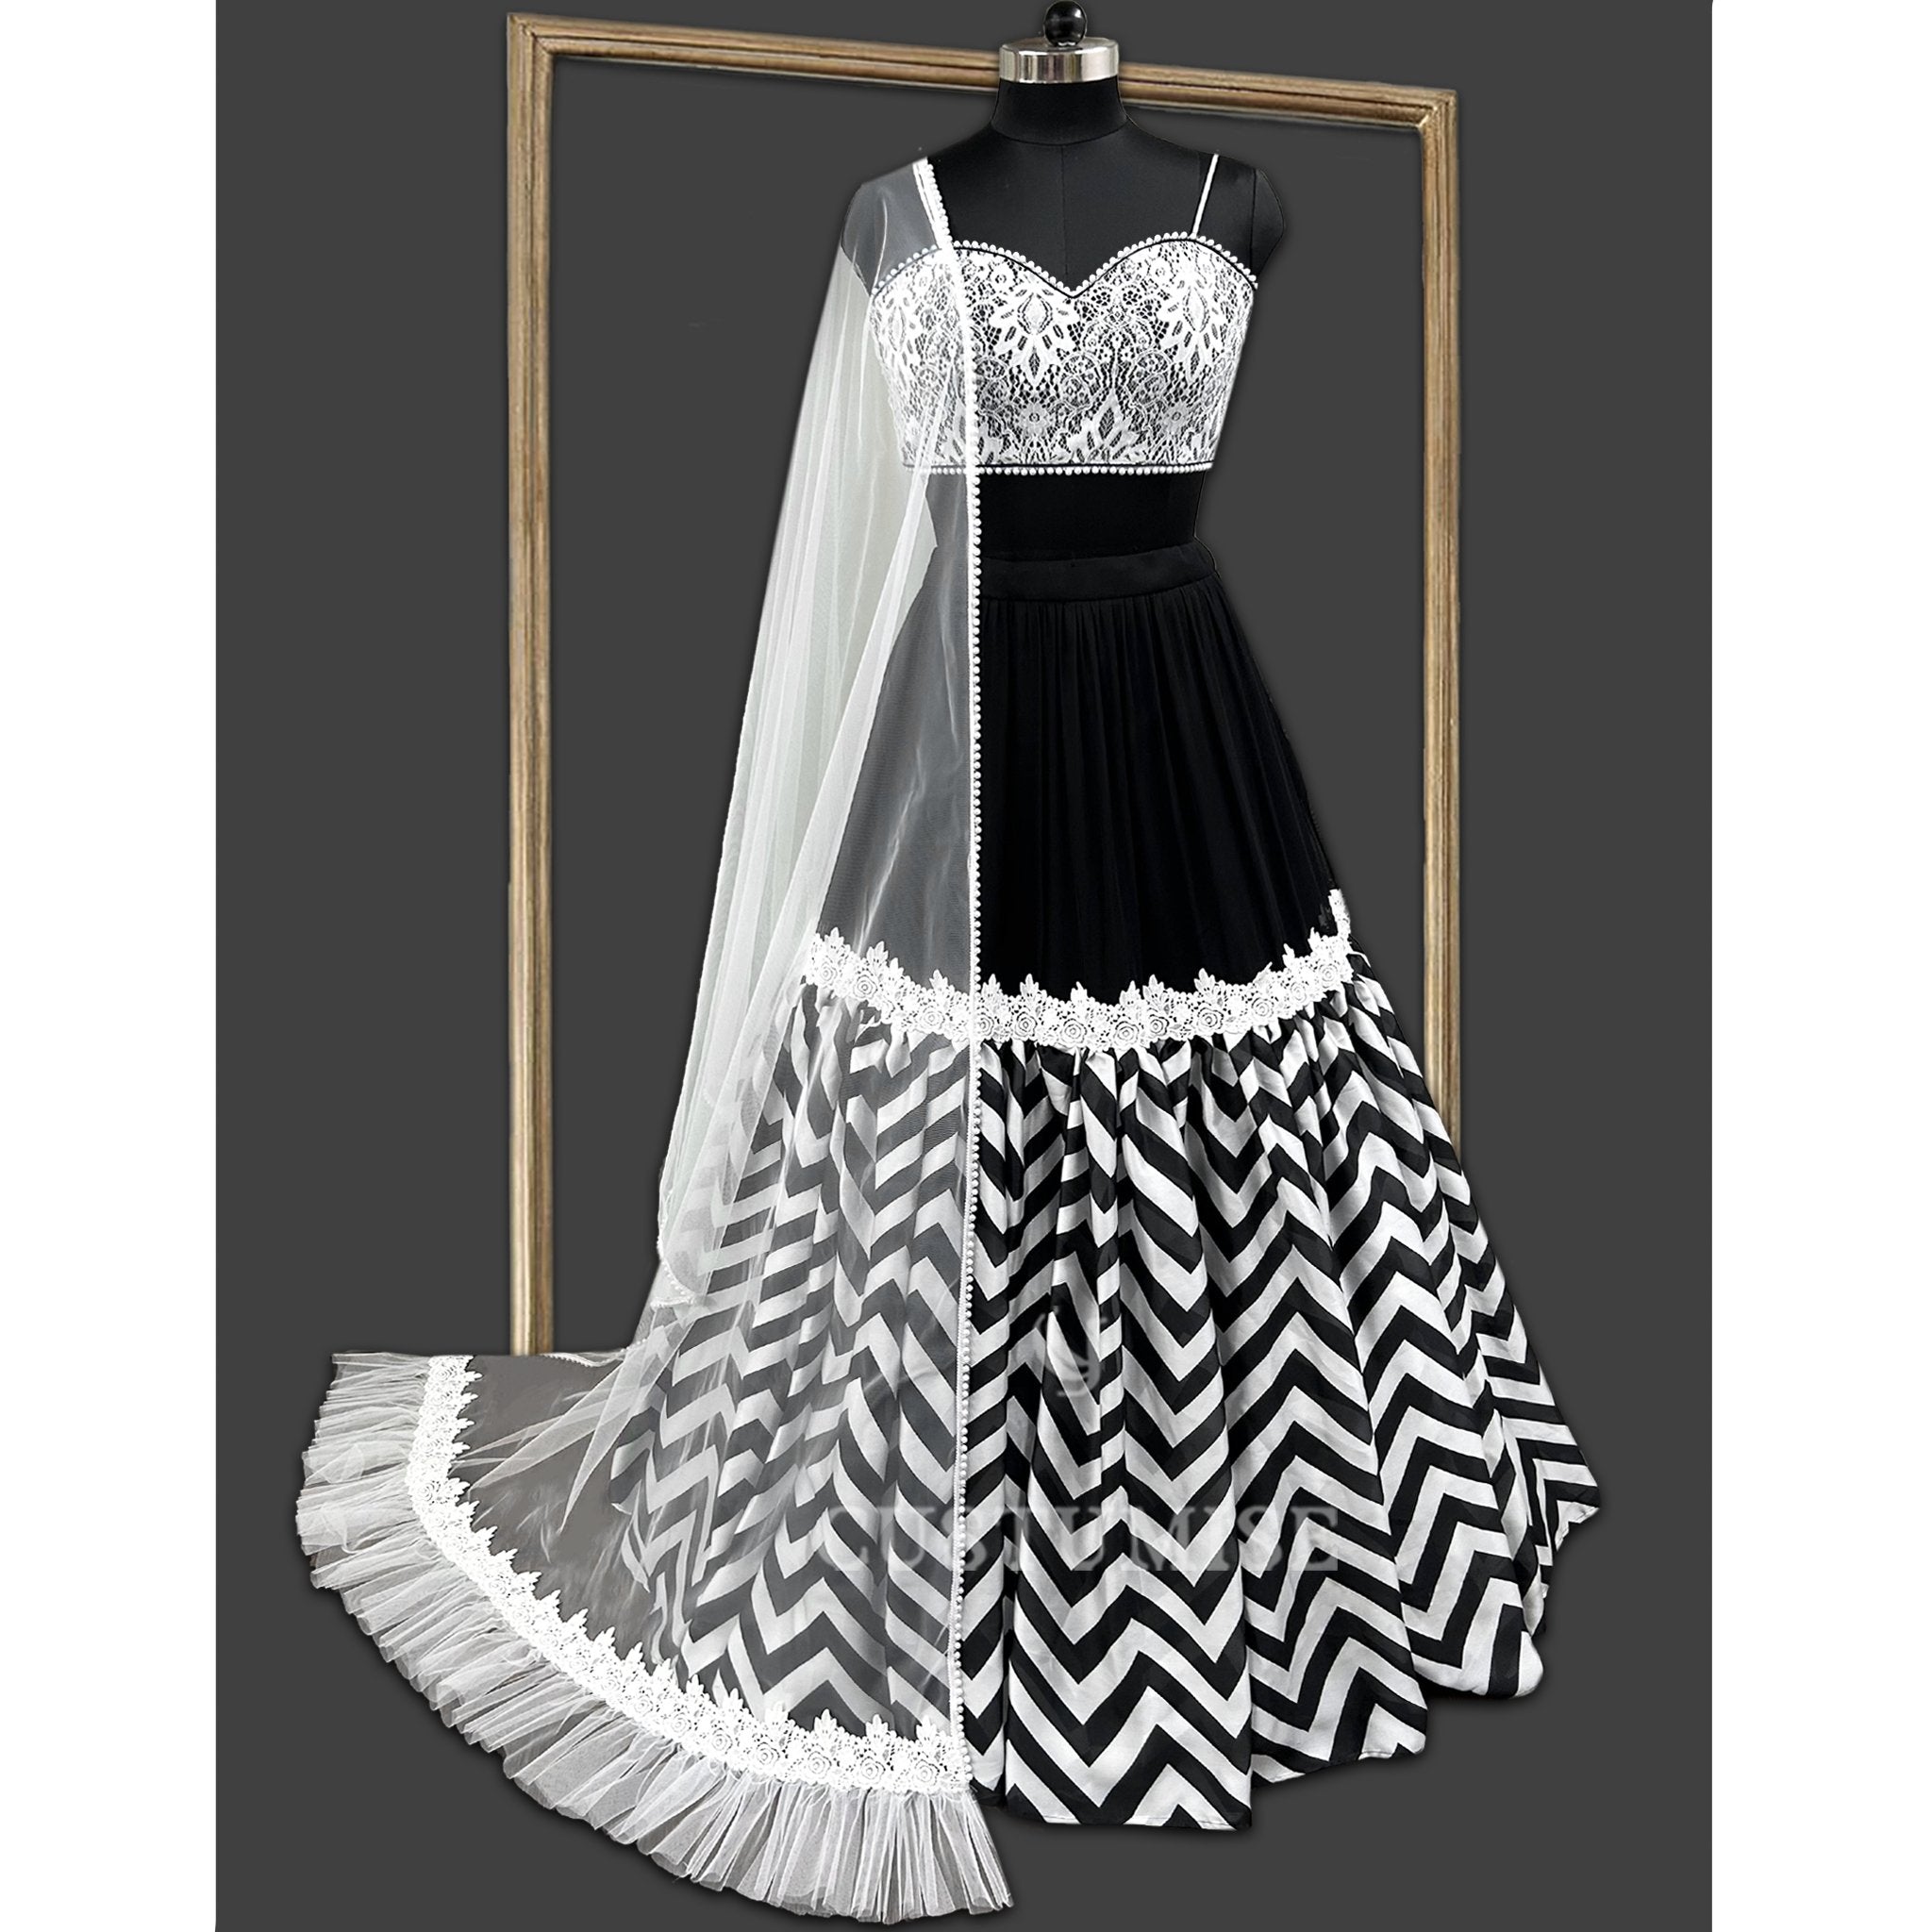 Chic Black & White Chevron Lehenga Set - Indian Designer Bridal Wedding Outfit